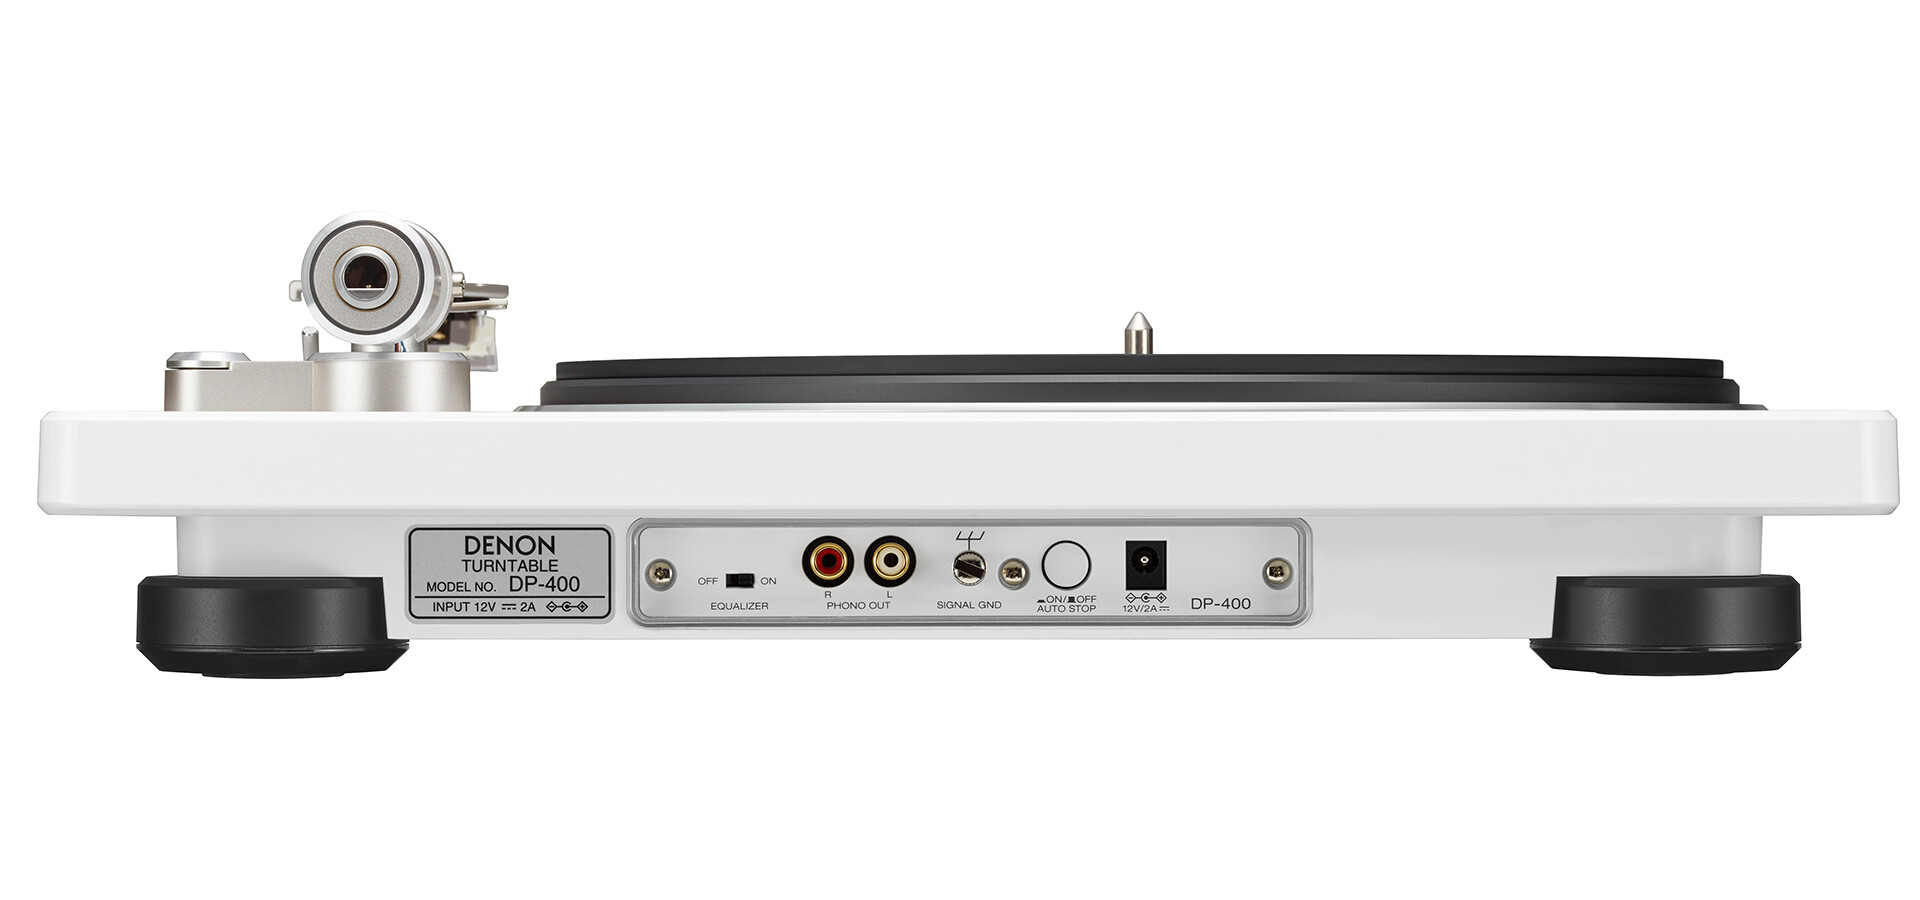 Denon-DP-400-Hi-Fi-Plattenspieler-mit-integriertem-Phono-EQ-weiss